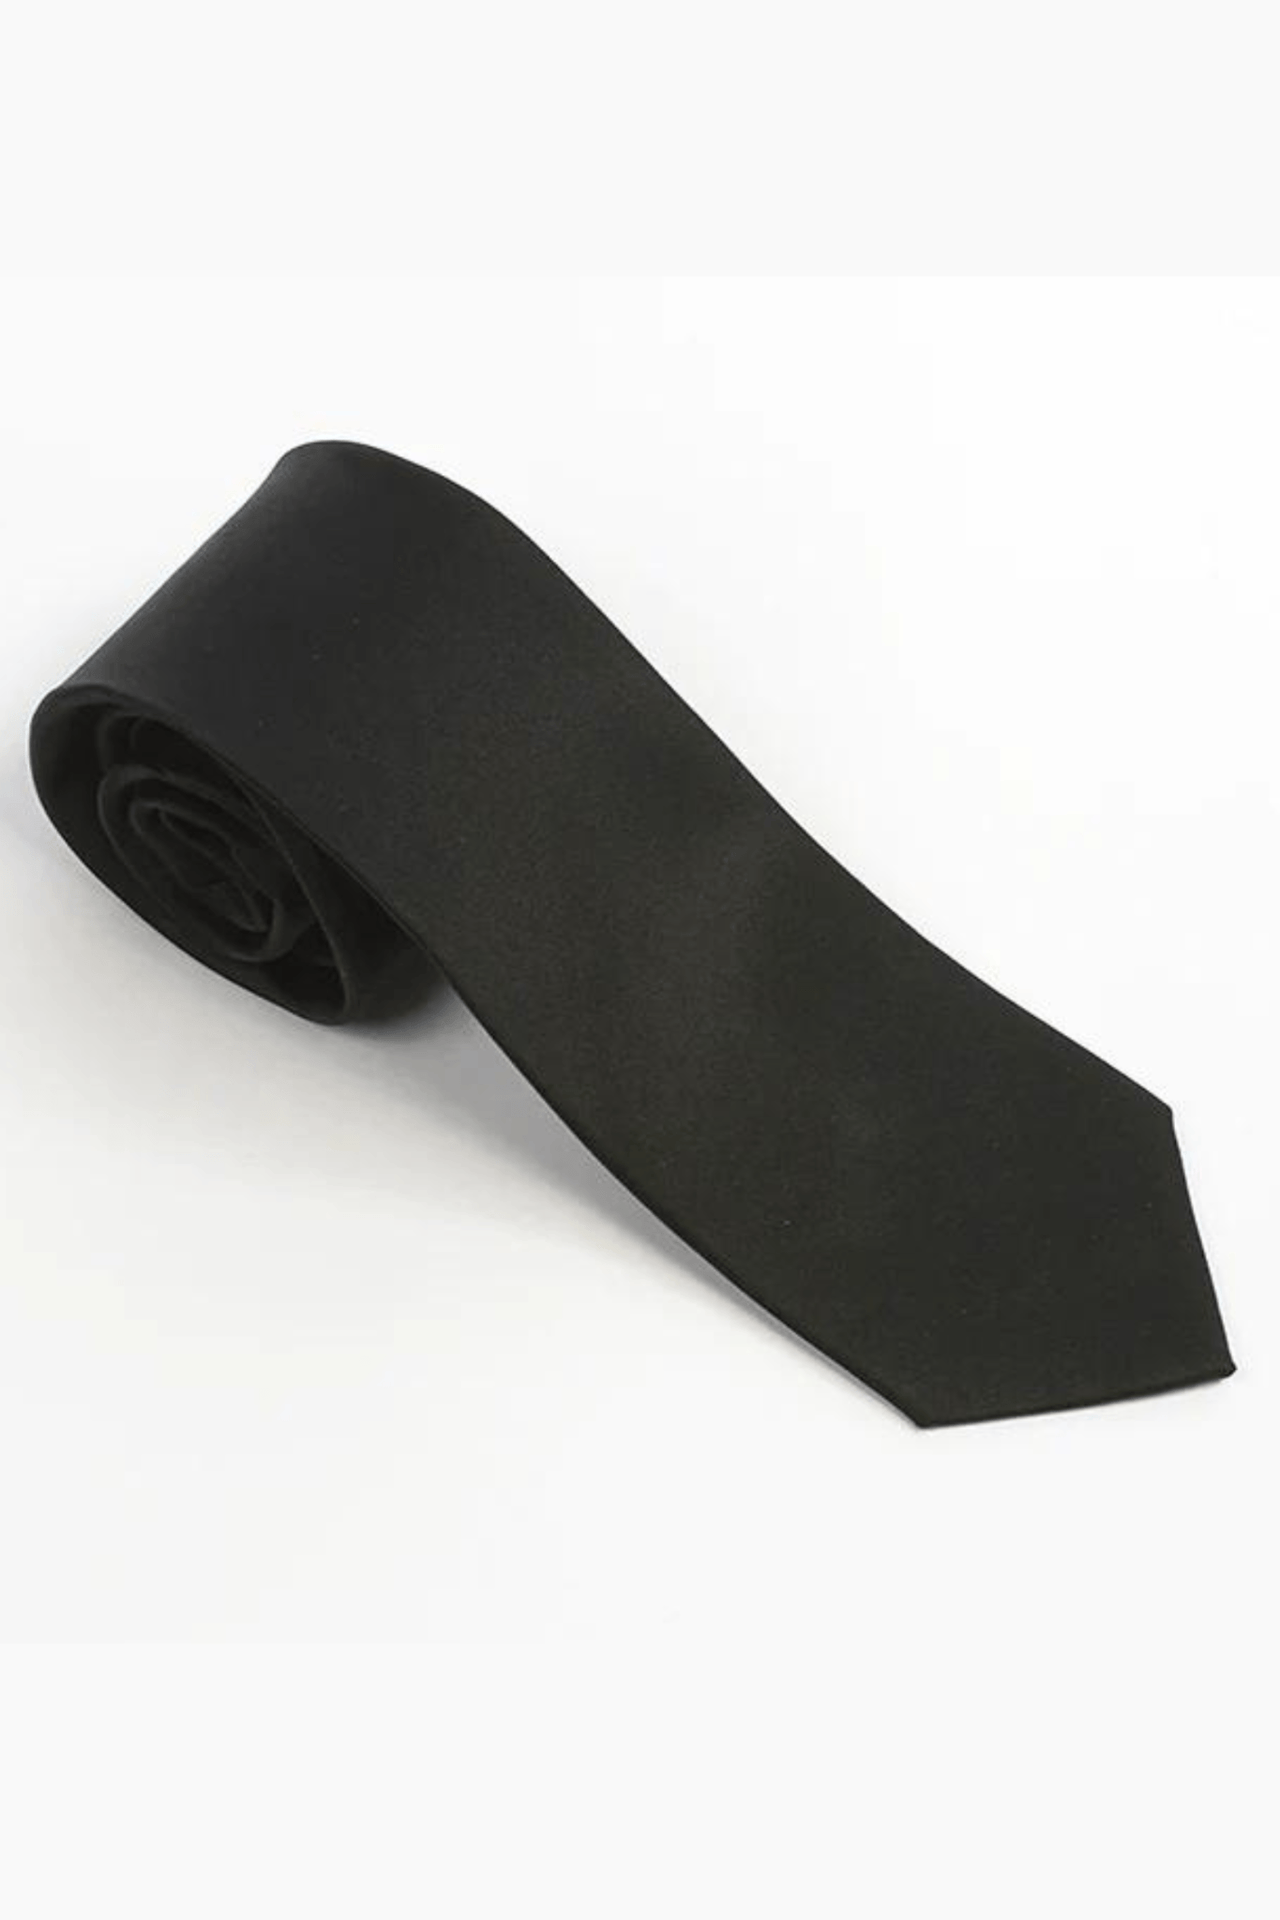 100% Woven Silk Black Tie - Tomasso Black